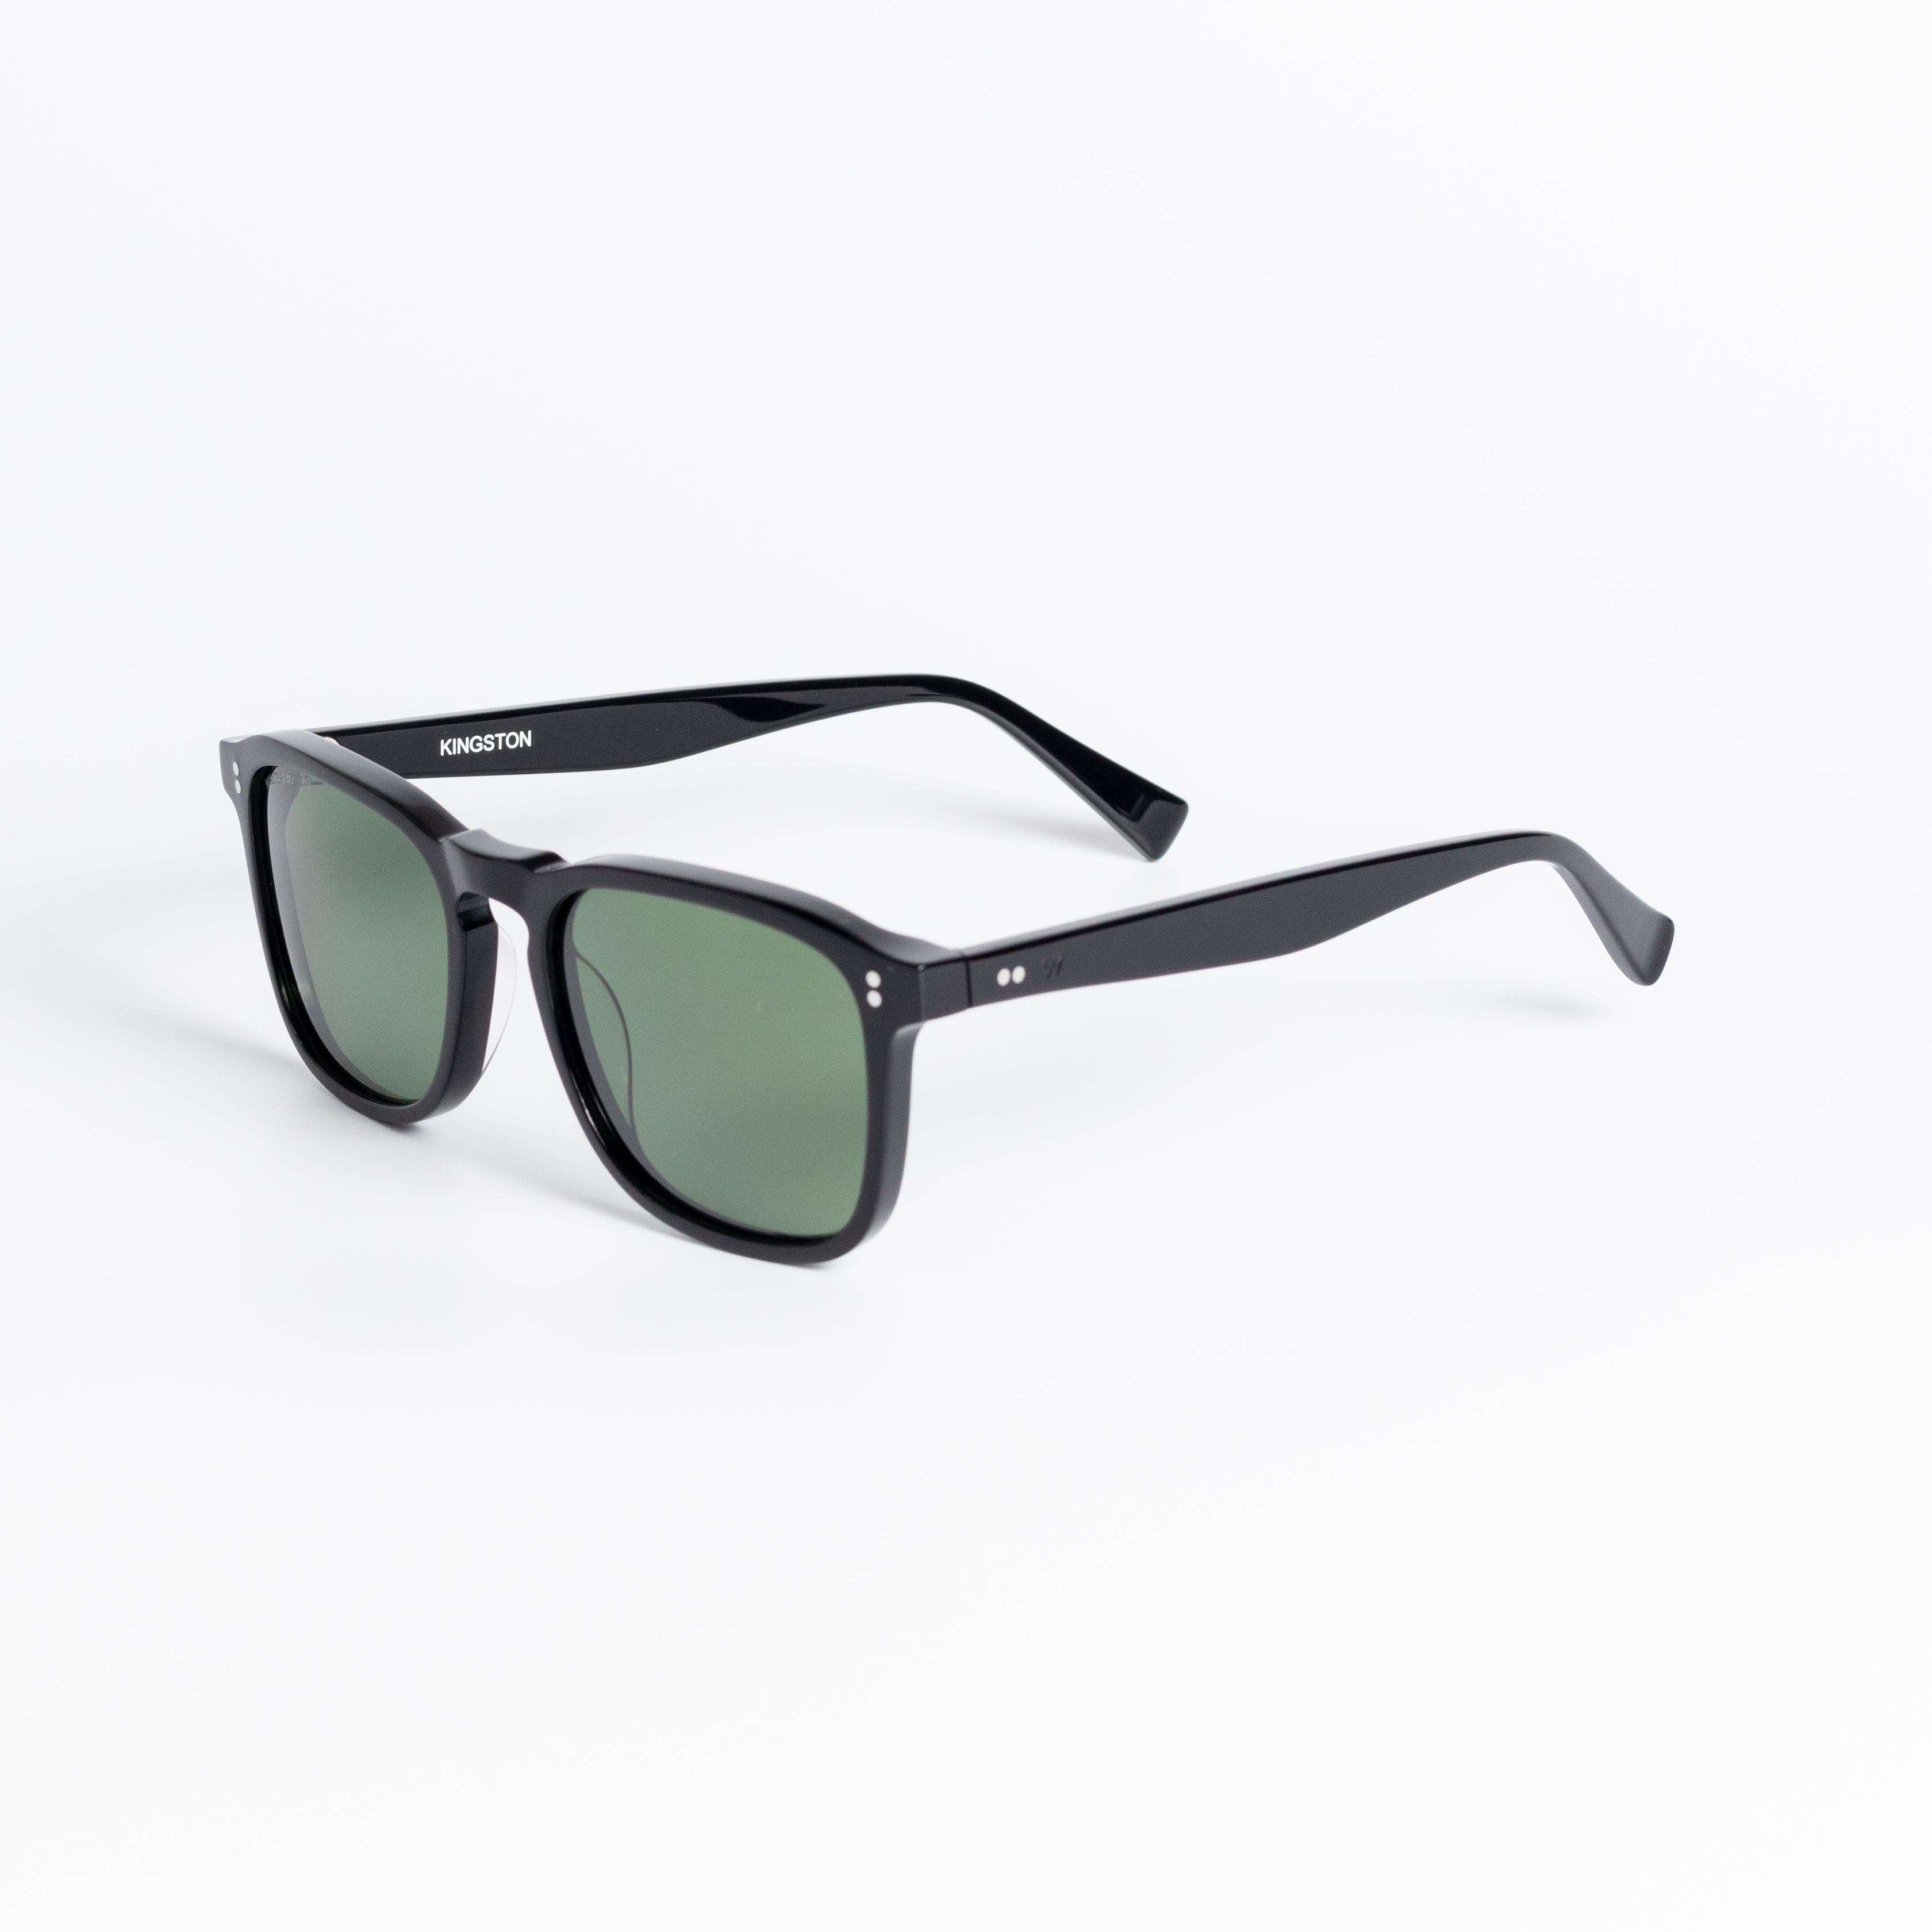 Walter Hill Sunglasses Black / Standard / Polarized Cat.3 KINGSTON - Black